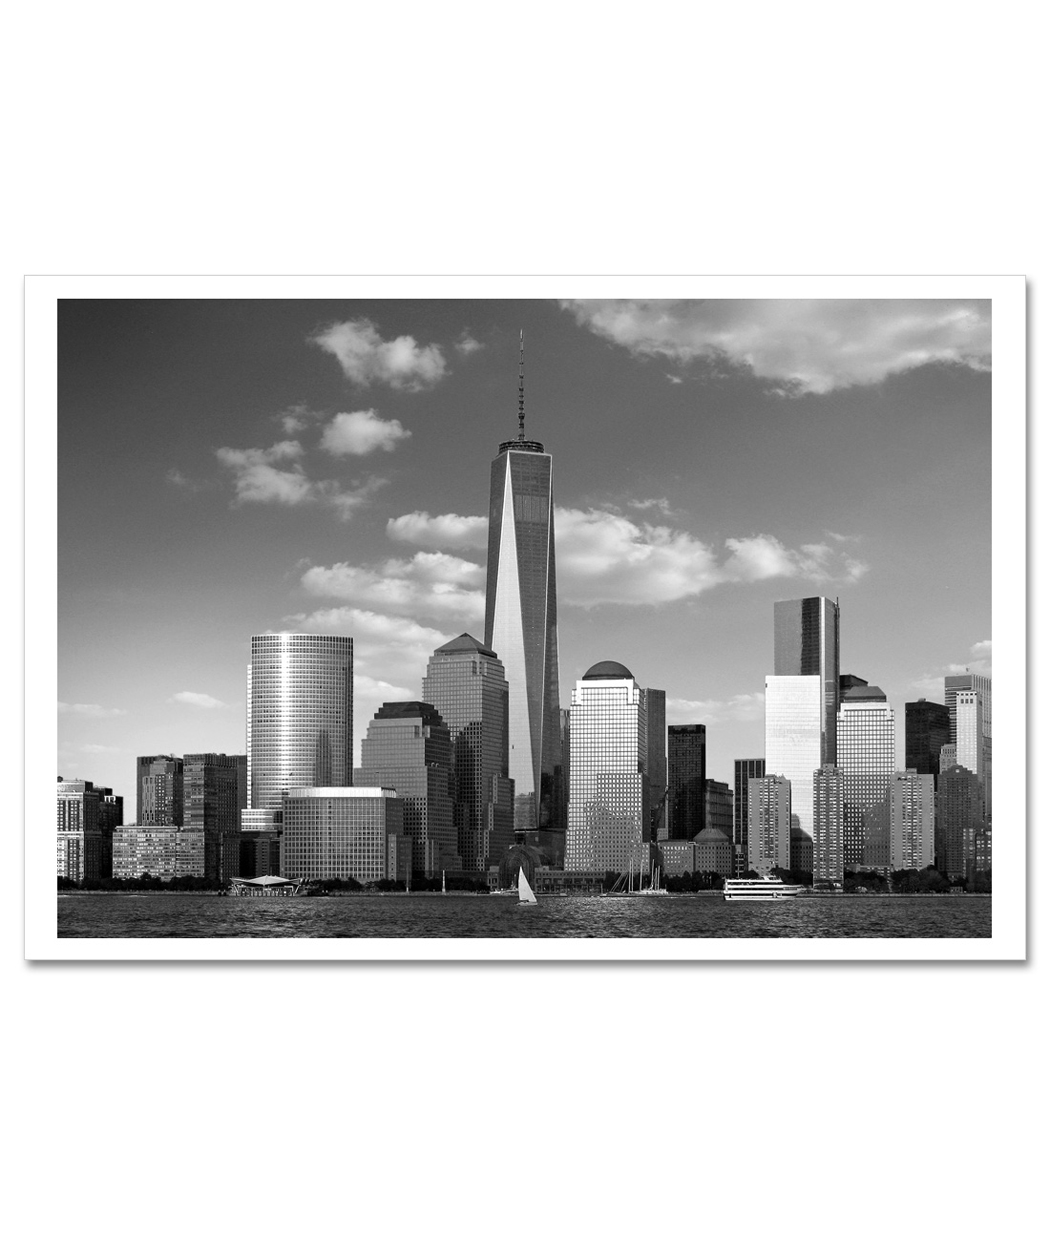 New York City Freedom Tower at Night Poster Art Print 24x36